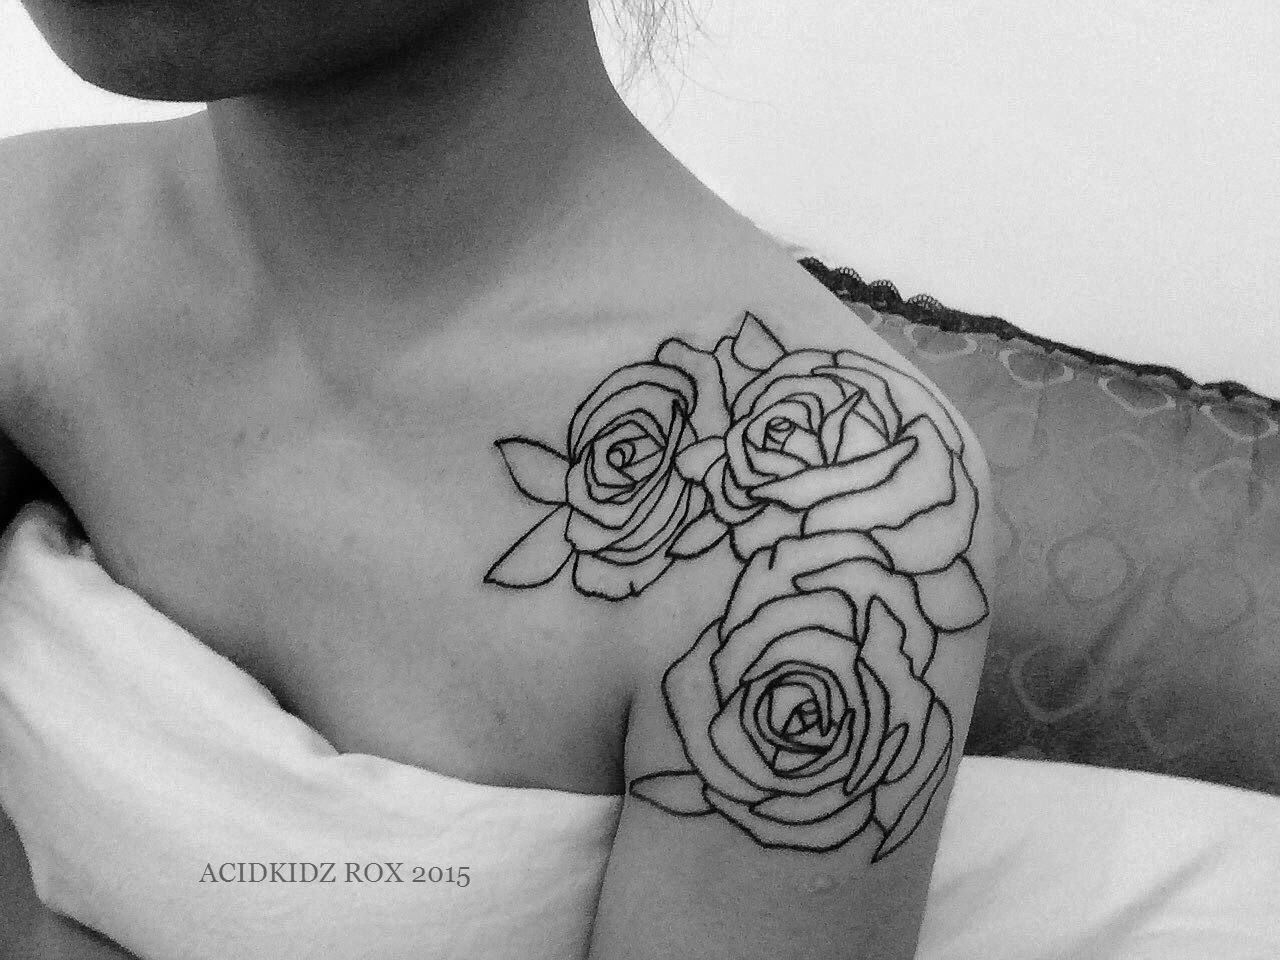 Taiwan Kaohsiung Roxiehart666 Acidkidz Tattoo Shoulder Rose with dimensions 1280 X 960